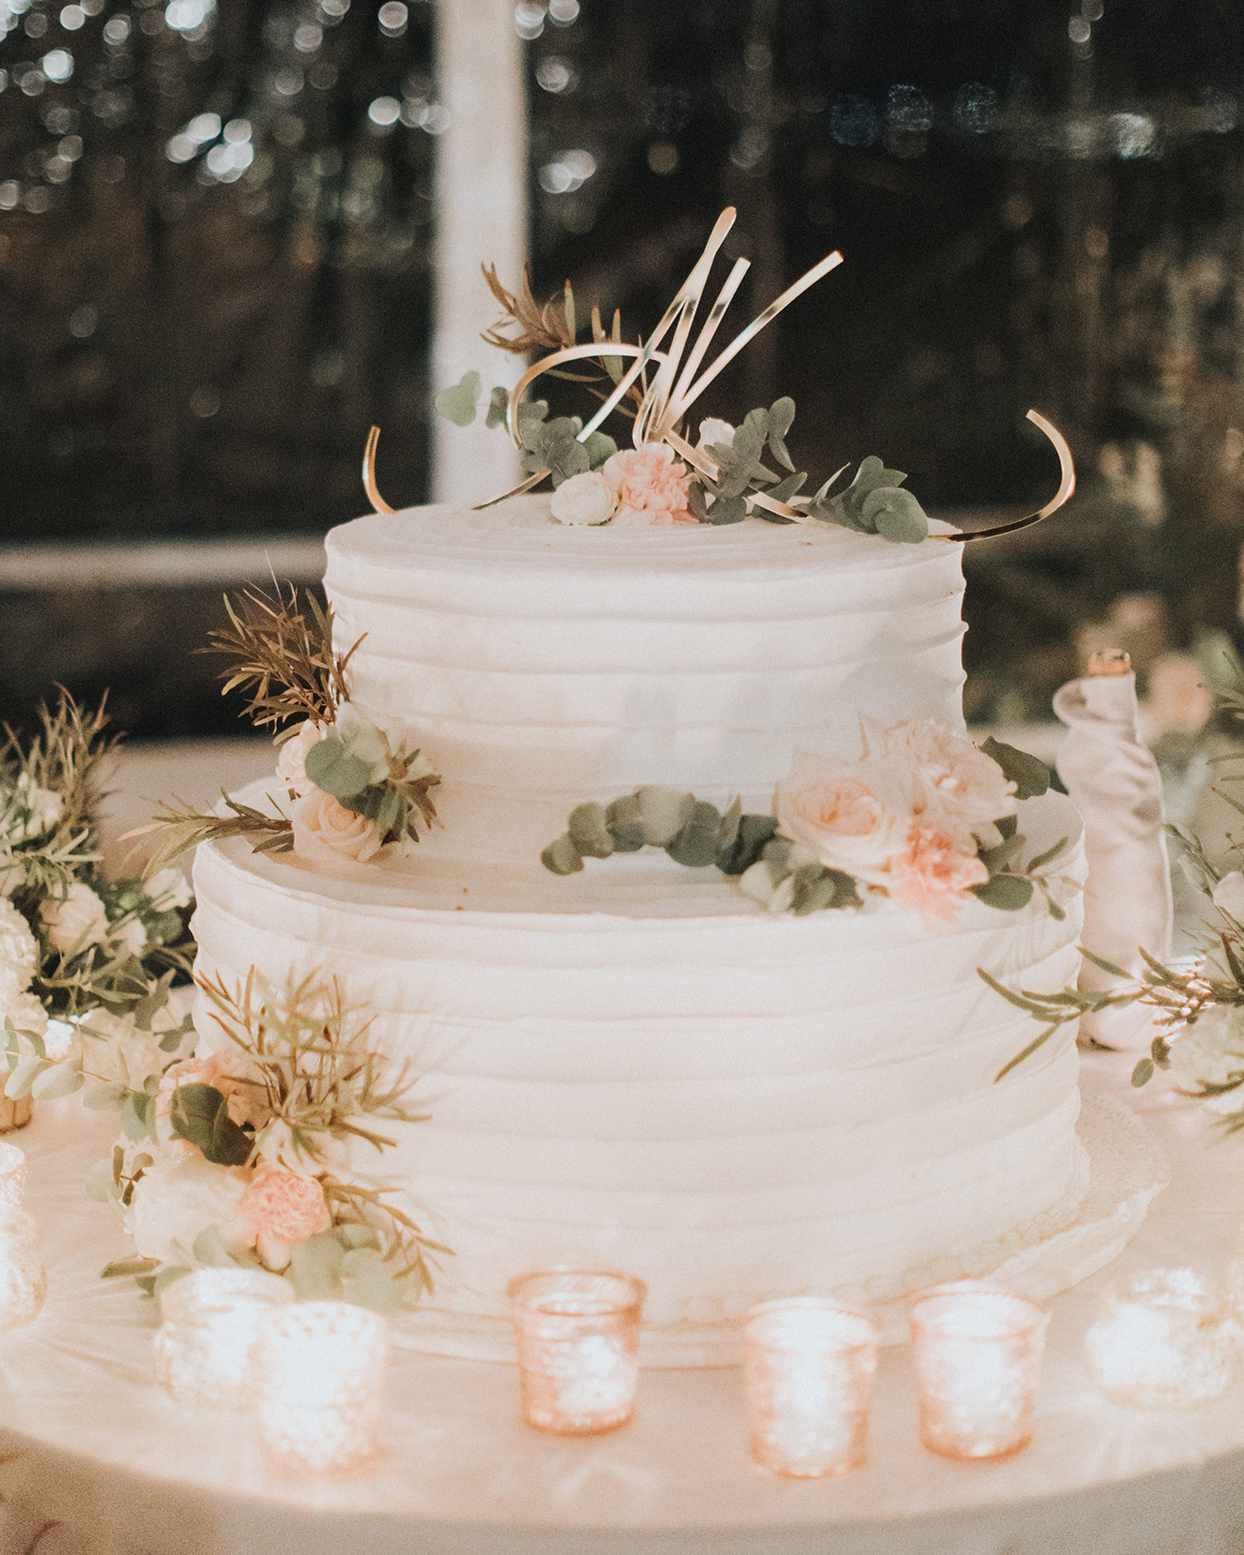 kiira arthur wedding cake with candles around it